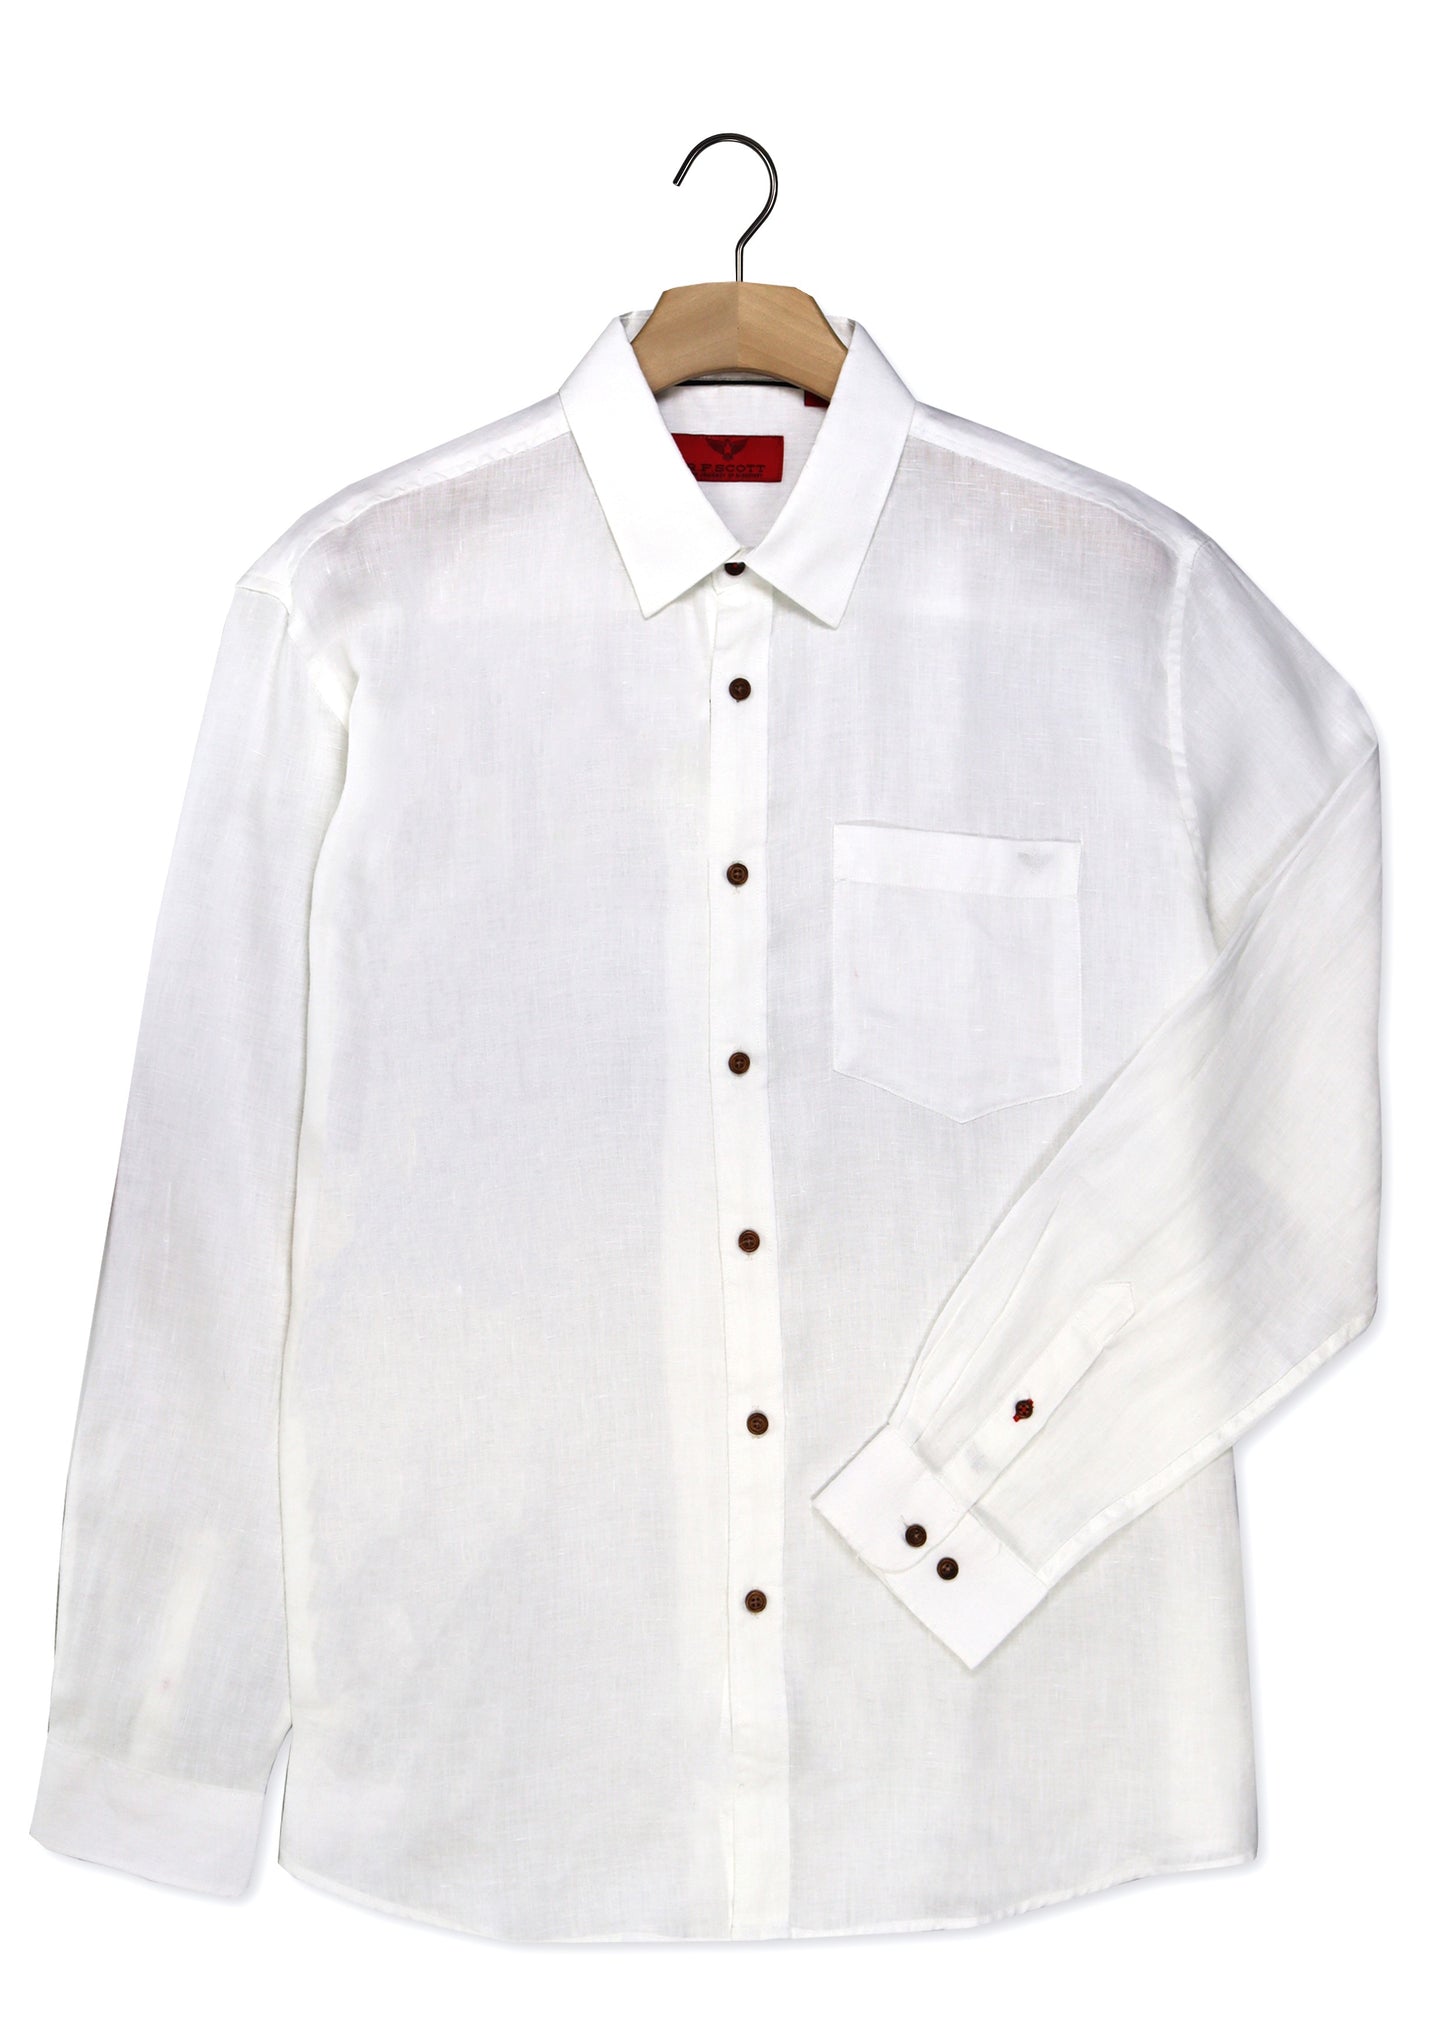 R.F. Scott - Fielding Linen Shirt - Navy or White